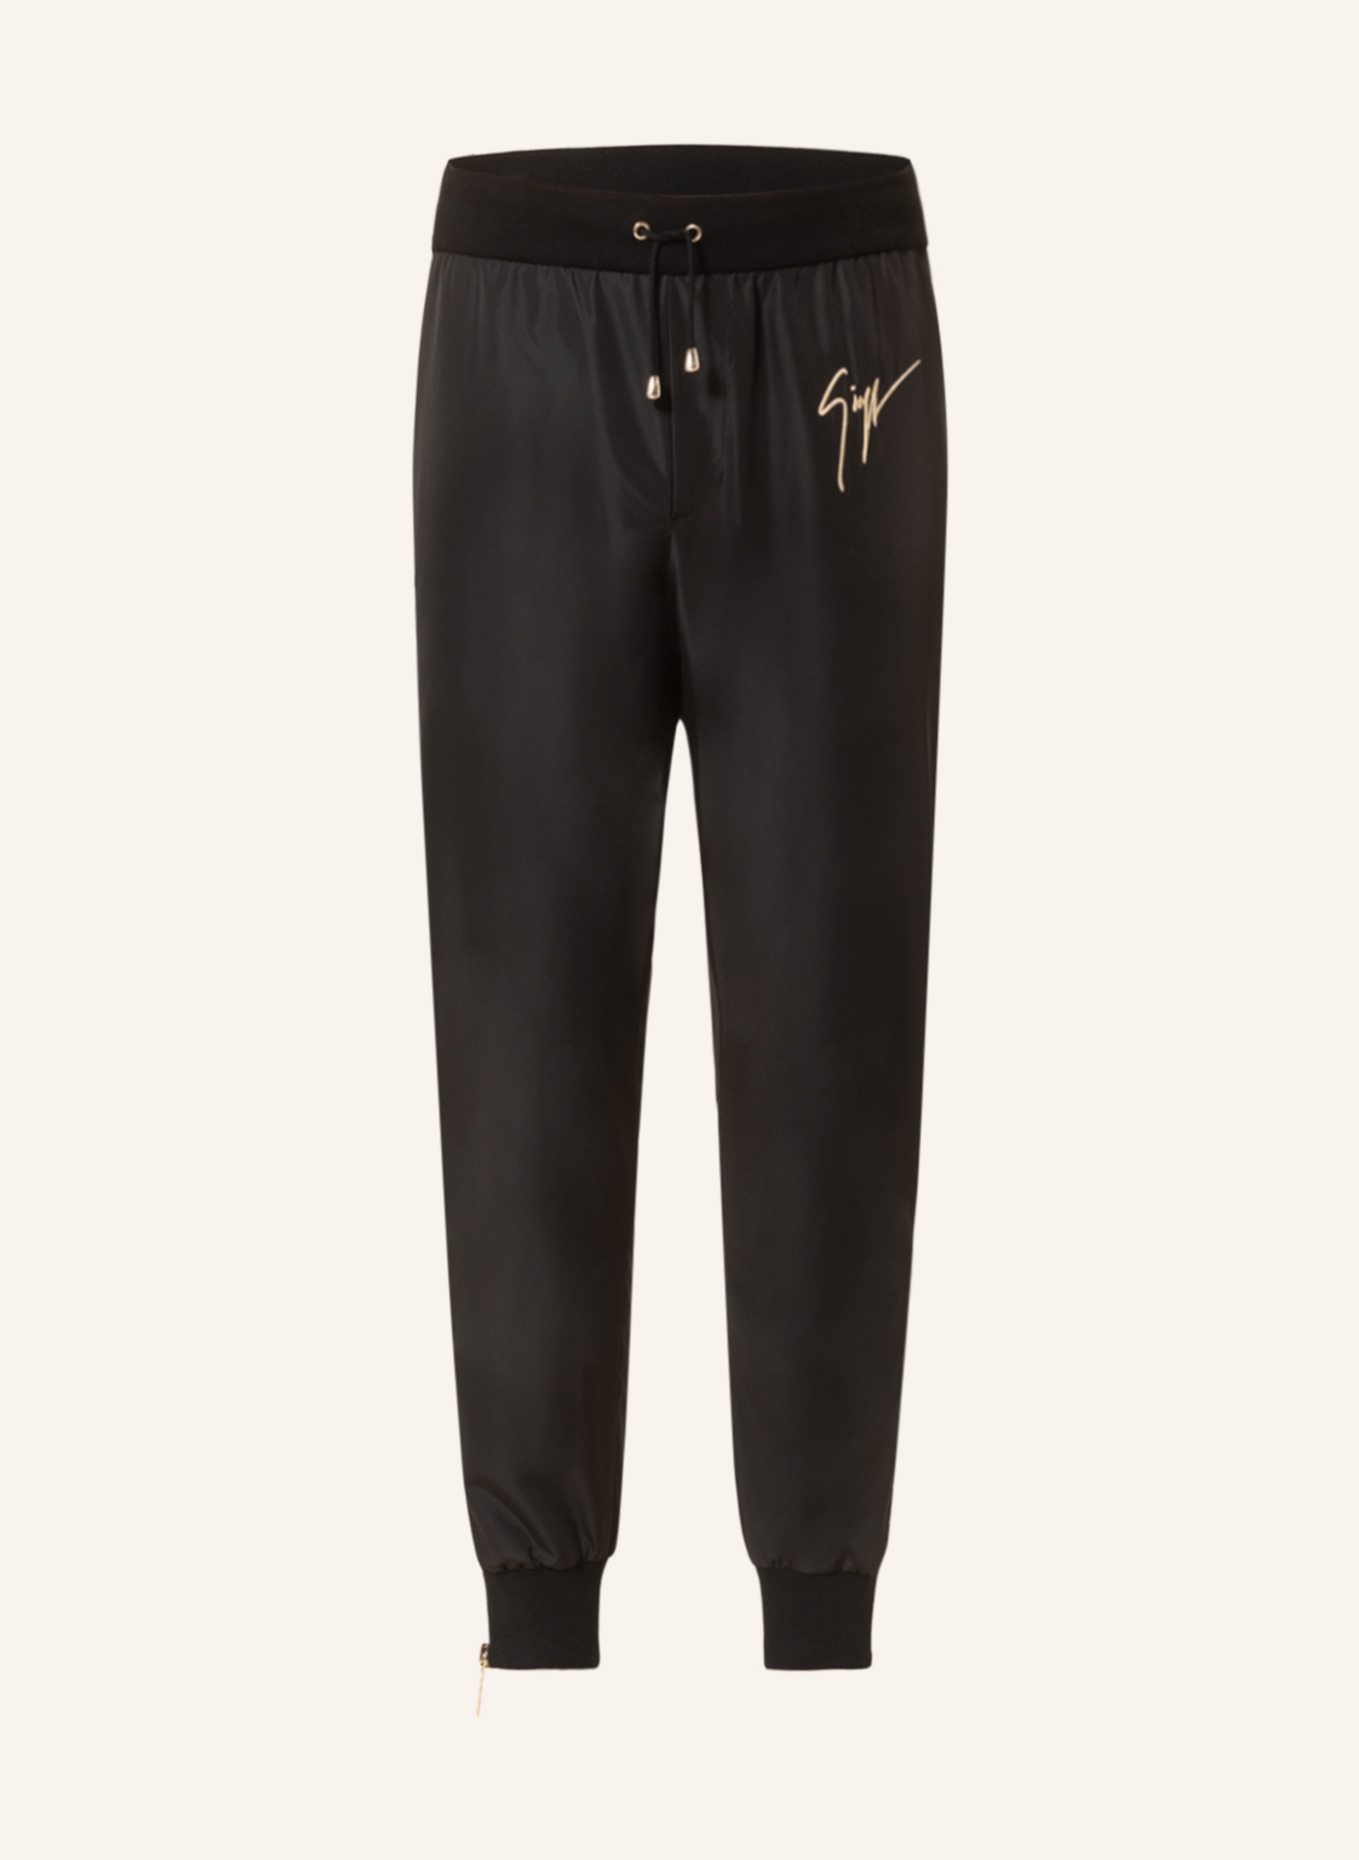 GIUSEPPE ZANOTTI DESIGN Pants in jogger style, Color: BLACK (Image 1)